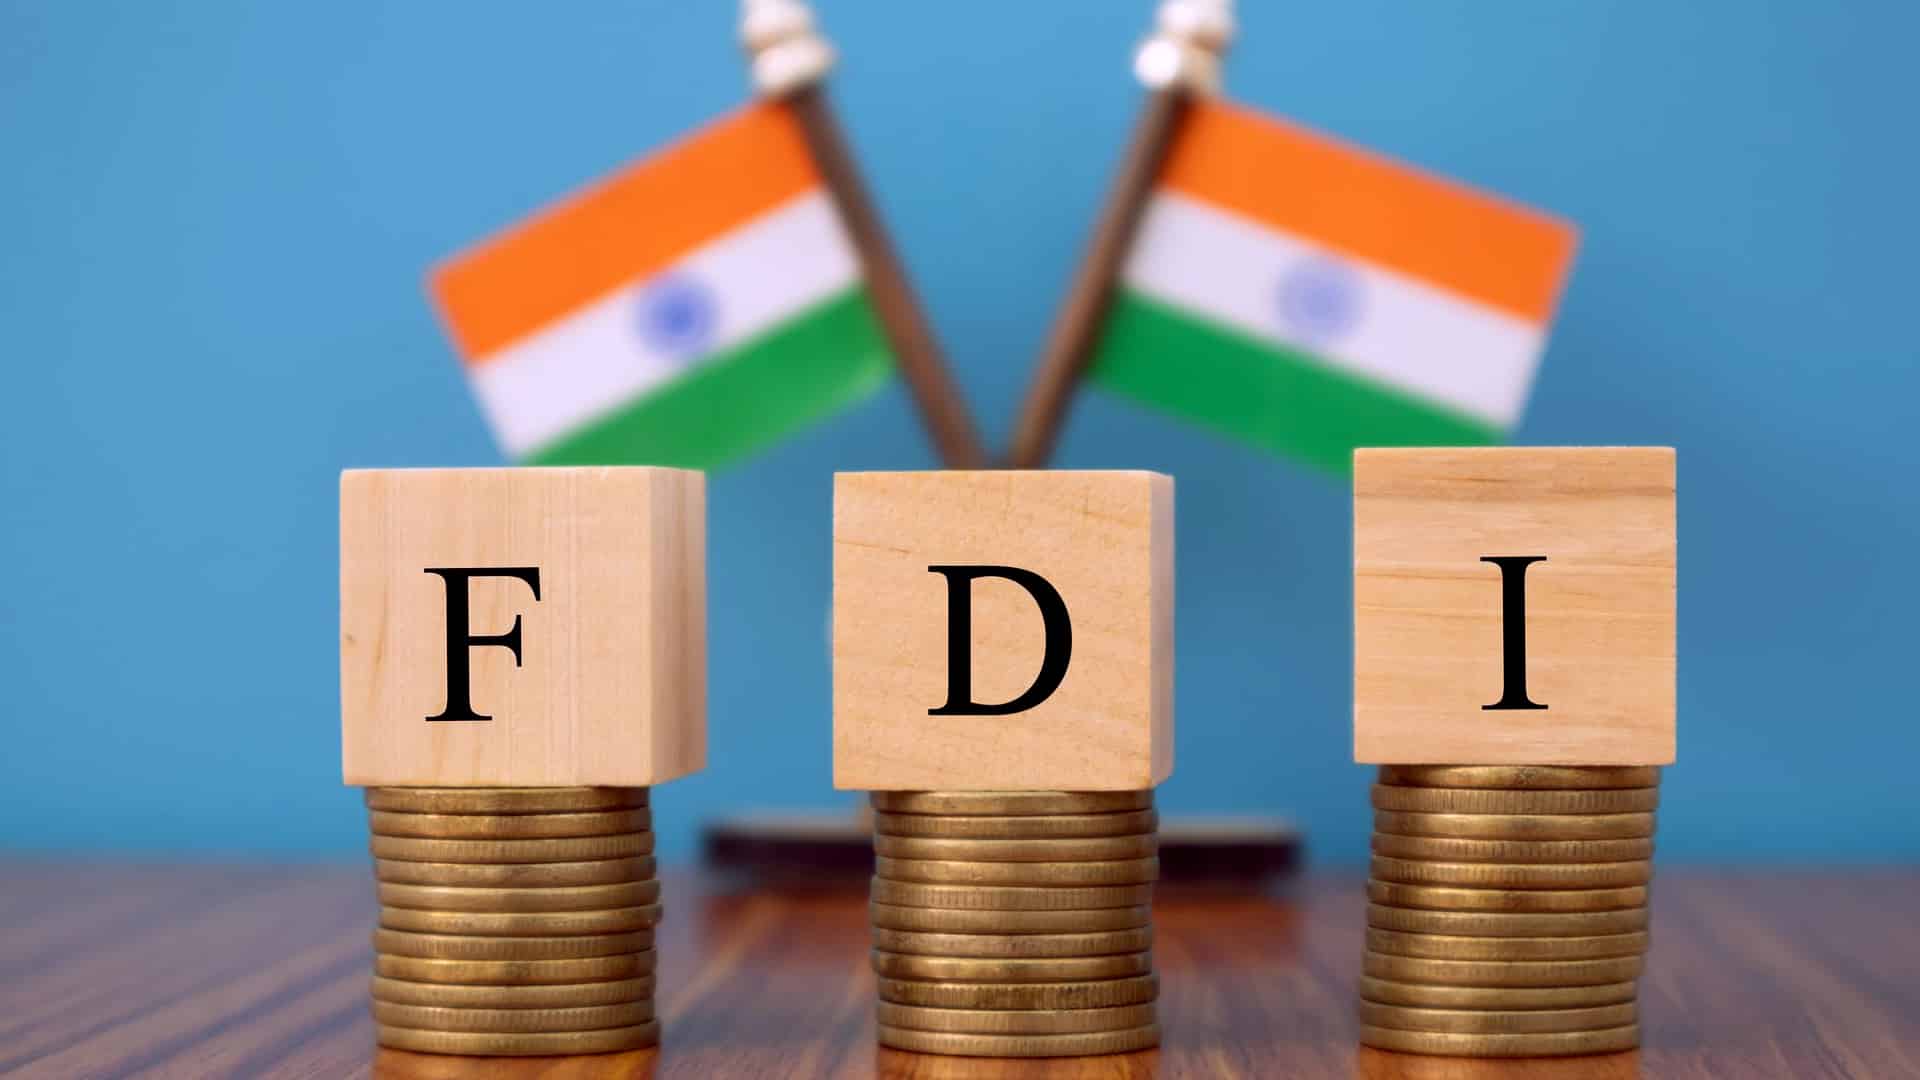 Healthy FDI inflow corroborates India's status as preferred investment destination: CII